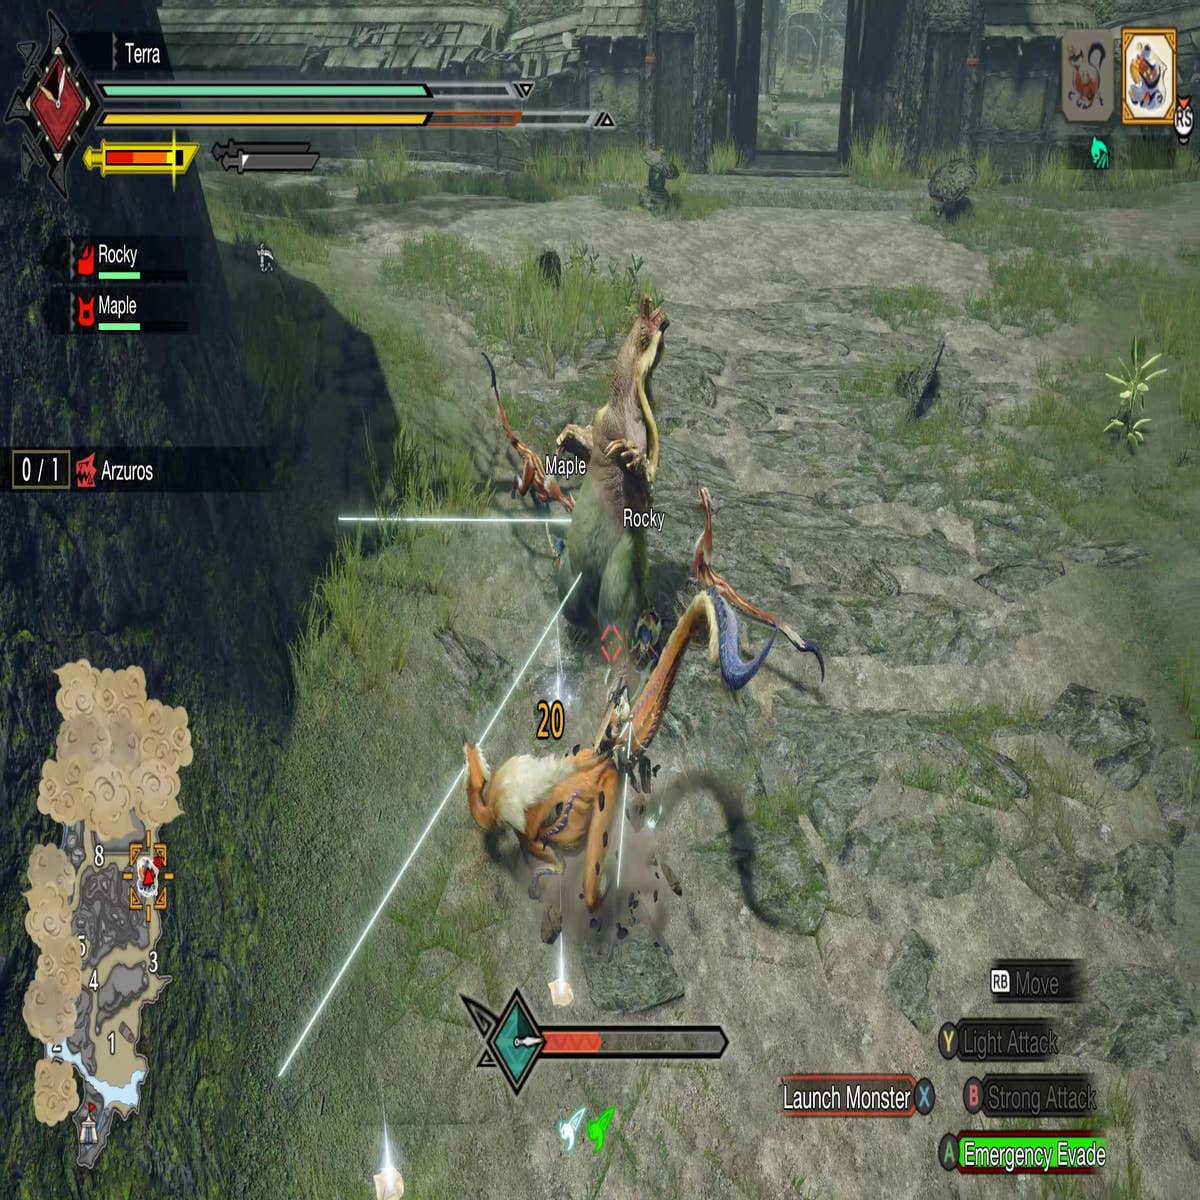 Monster Hunter Rise Review: Streamlined Hunting (PC) - KeenGamer